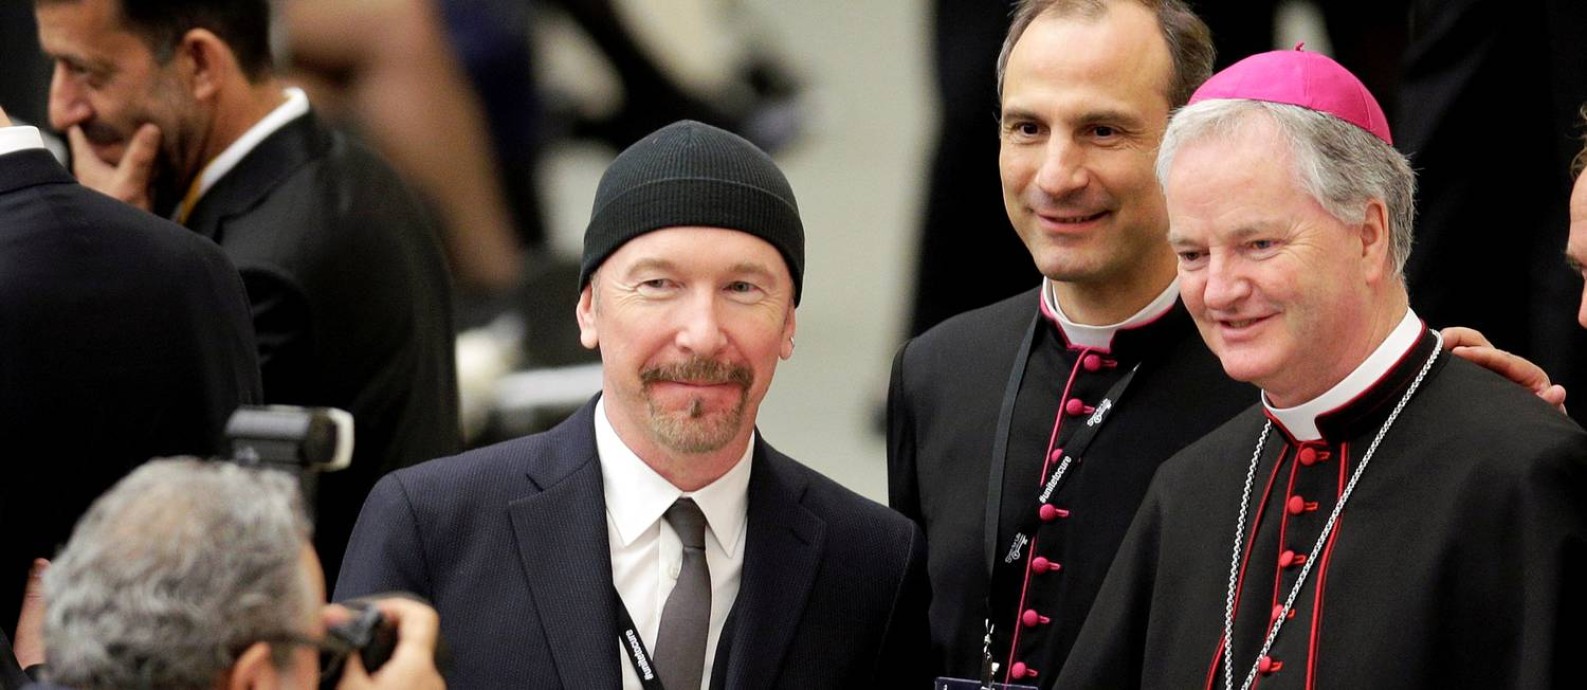 The Edge, guitarrista do U2, ao lado do bispo irlandês Paul Tighe, no Vaticano Foto: MAX ROSSI / REUTERS